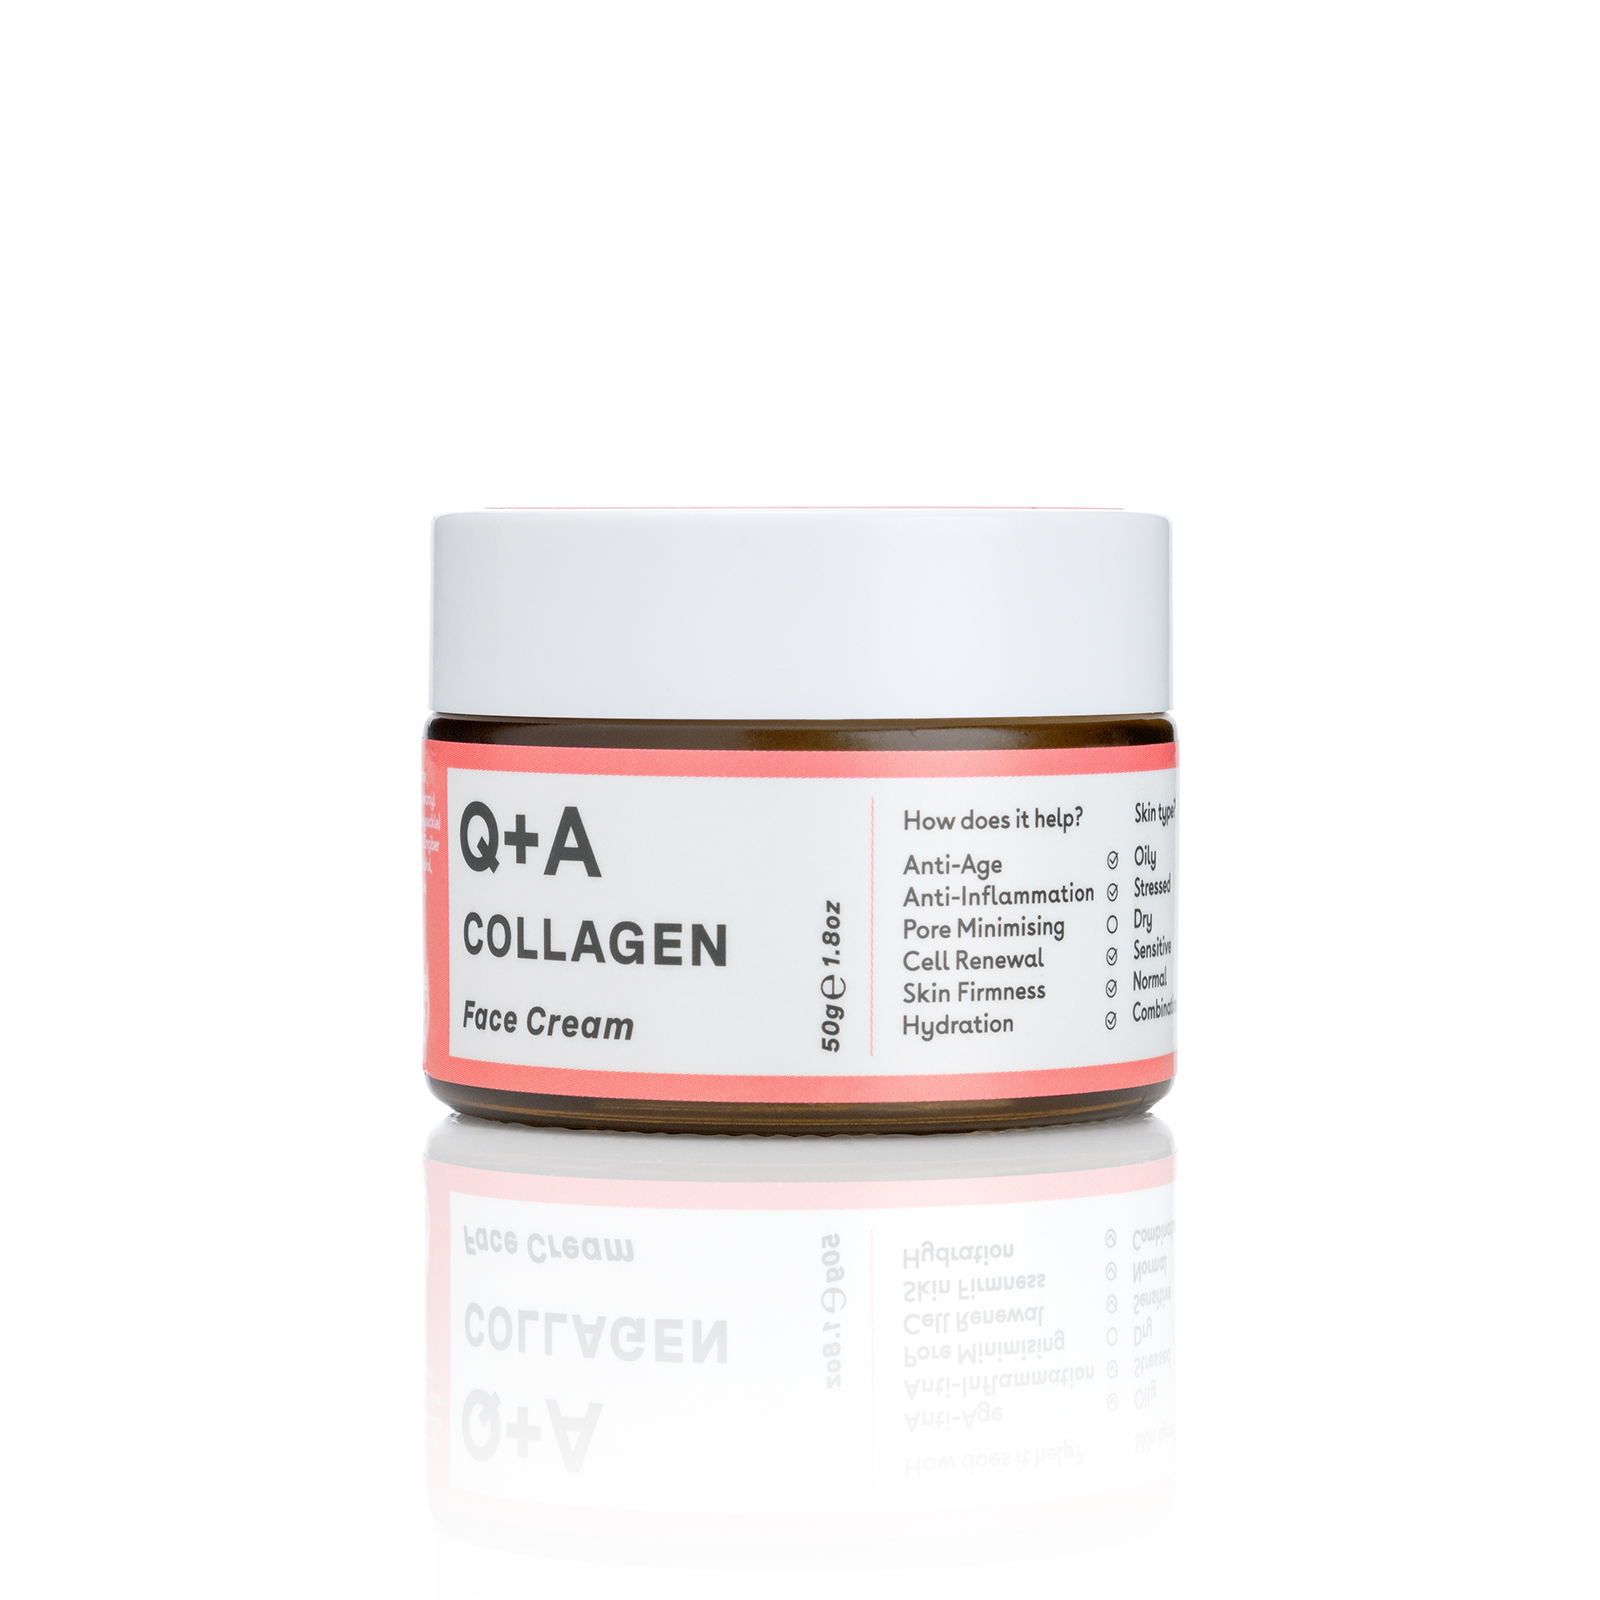 Q+A Collagen Face Cream